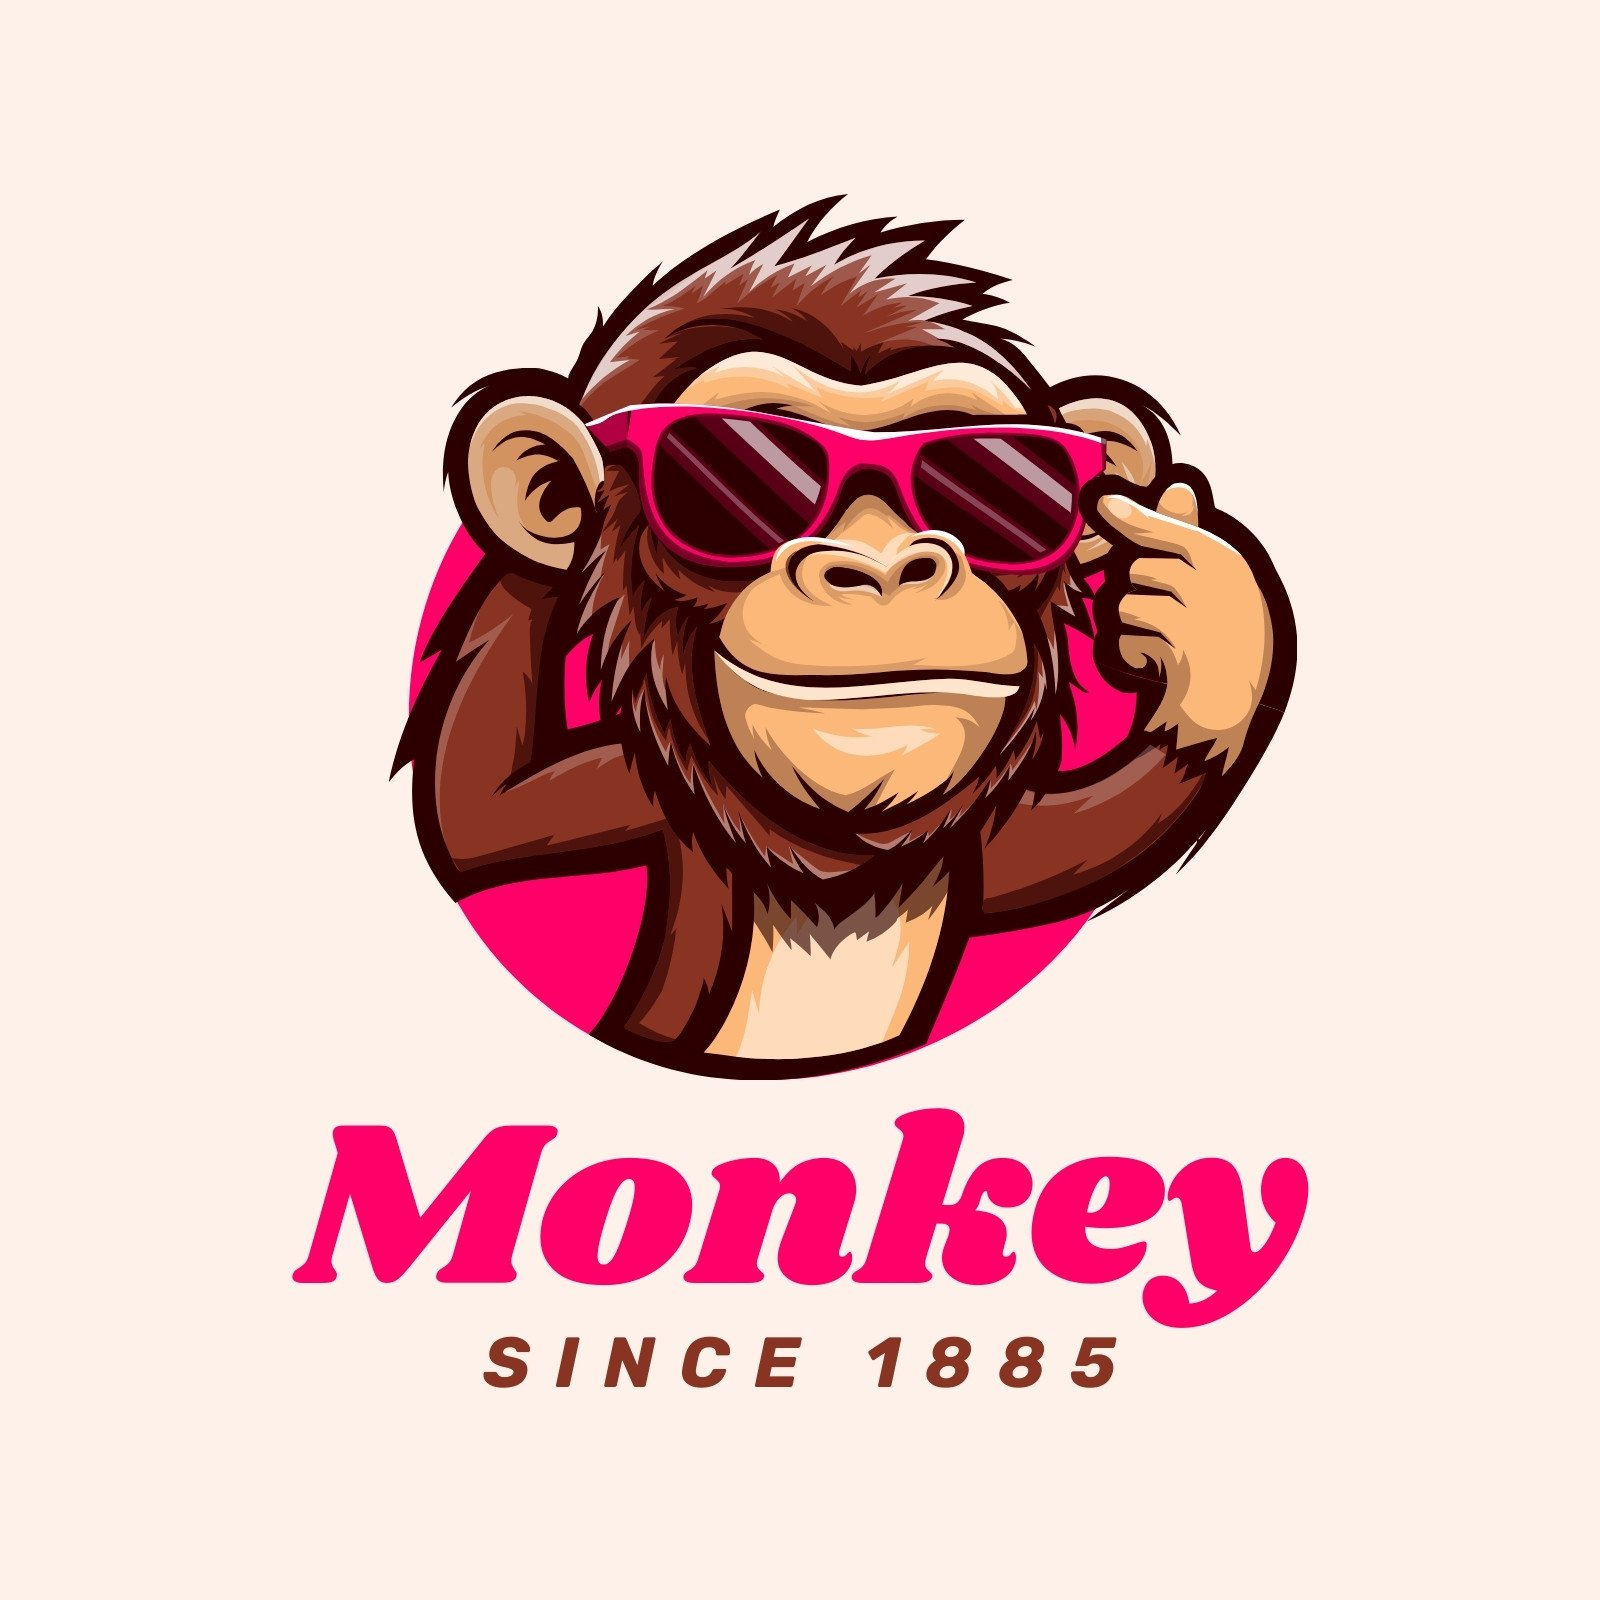 Brown and Pink Illustrative Monkey Gaming Logo